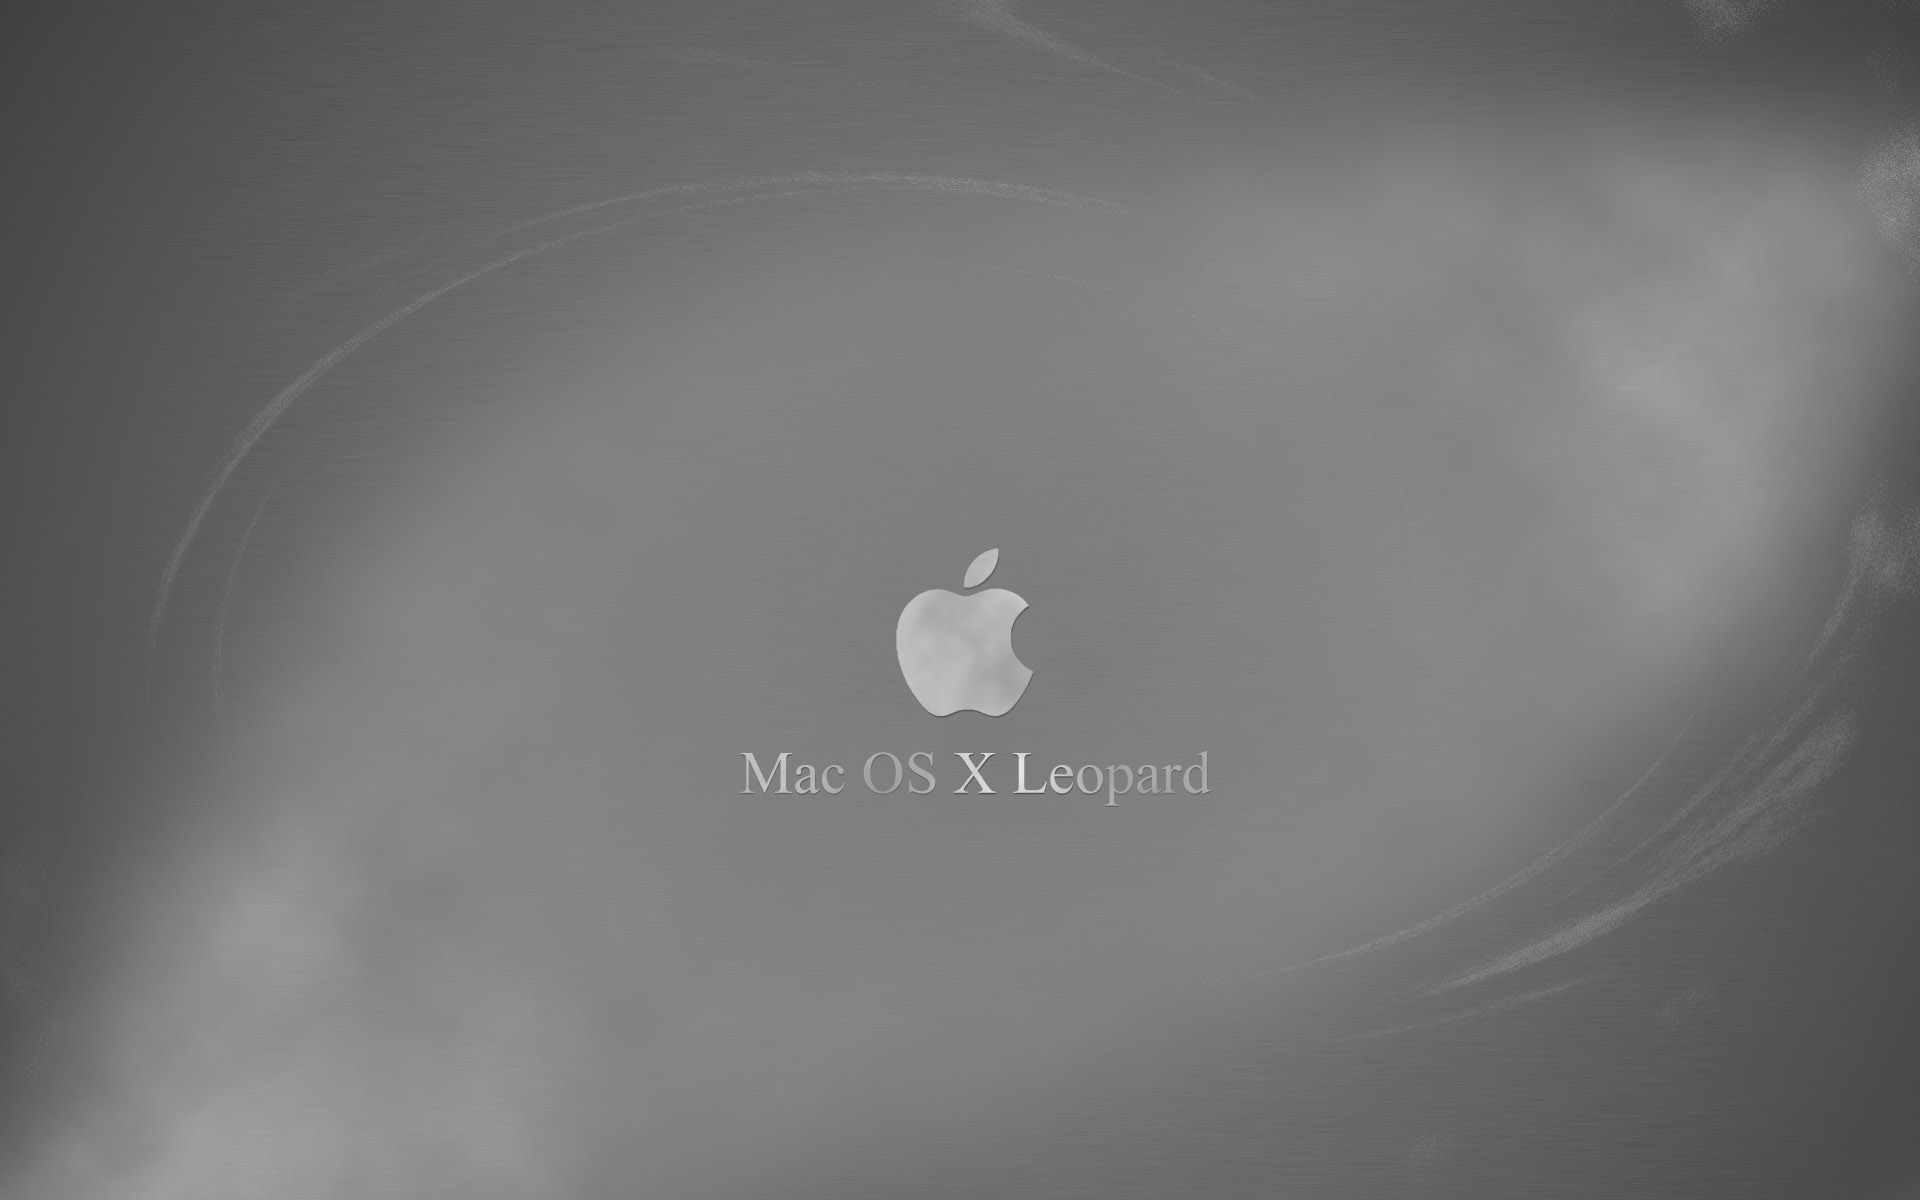 Apple Wallpaper Mac Os X Snow Leopard Desktop Image On